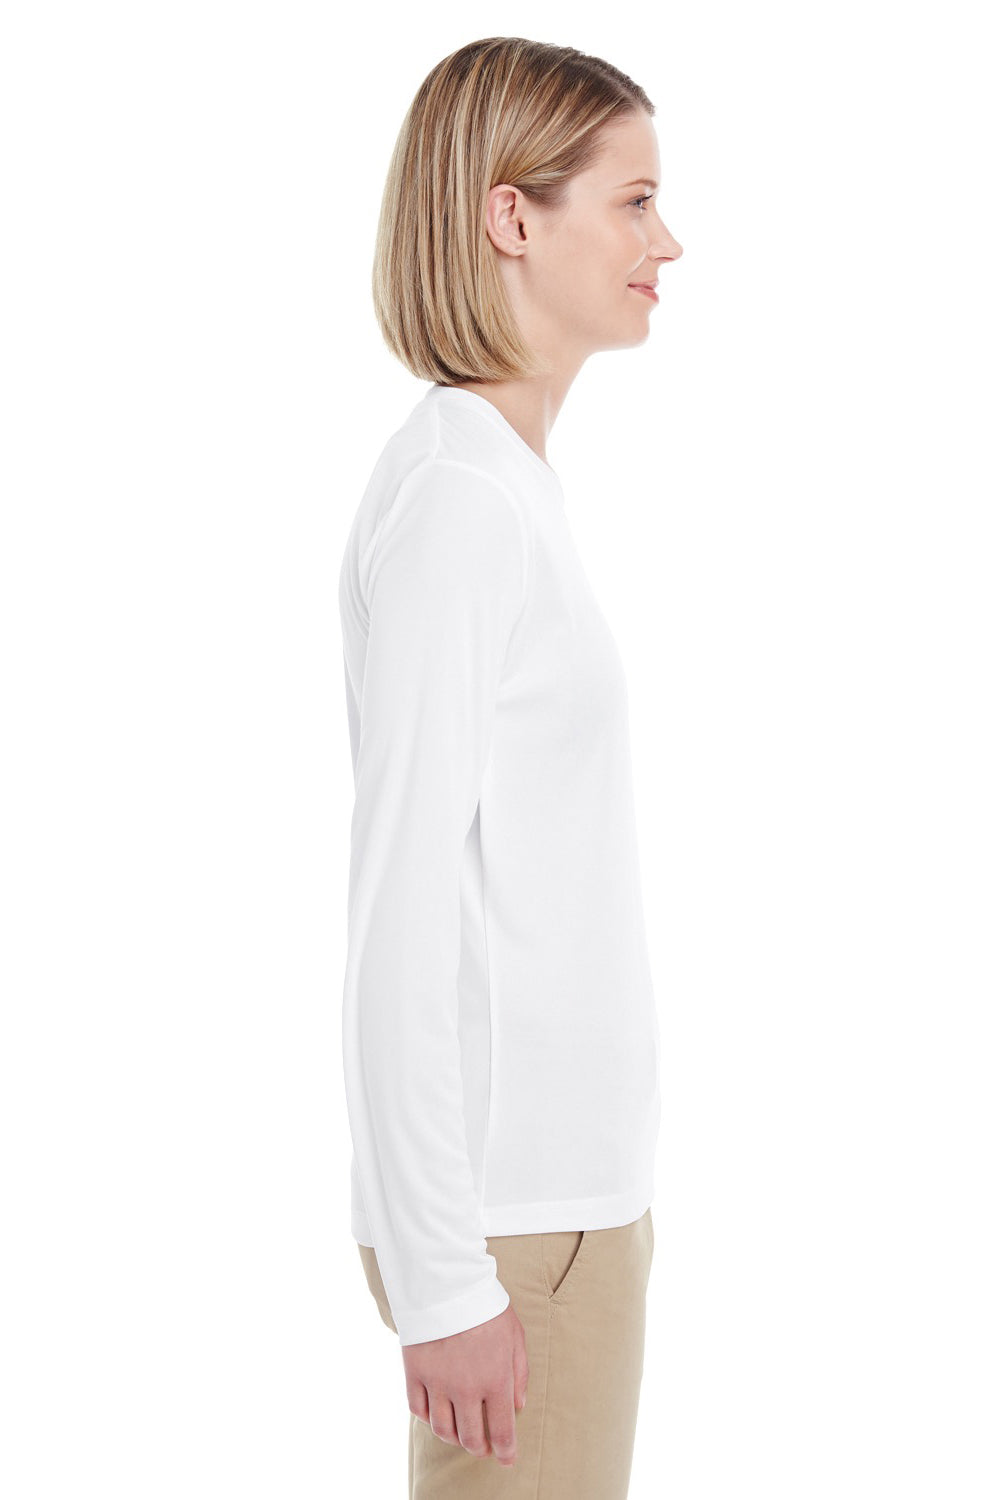 UltraClub 8622W Womens Cool & Dry Performance Moisture Wicking Long Sleeve Crewneck T-Shirt White Side